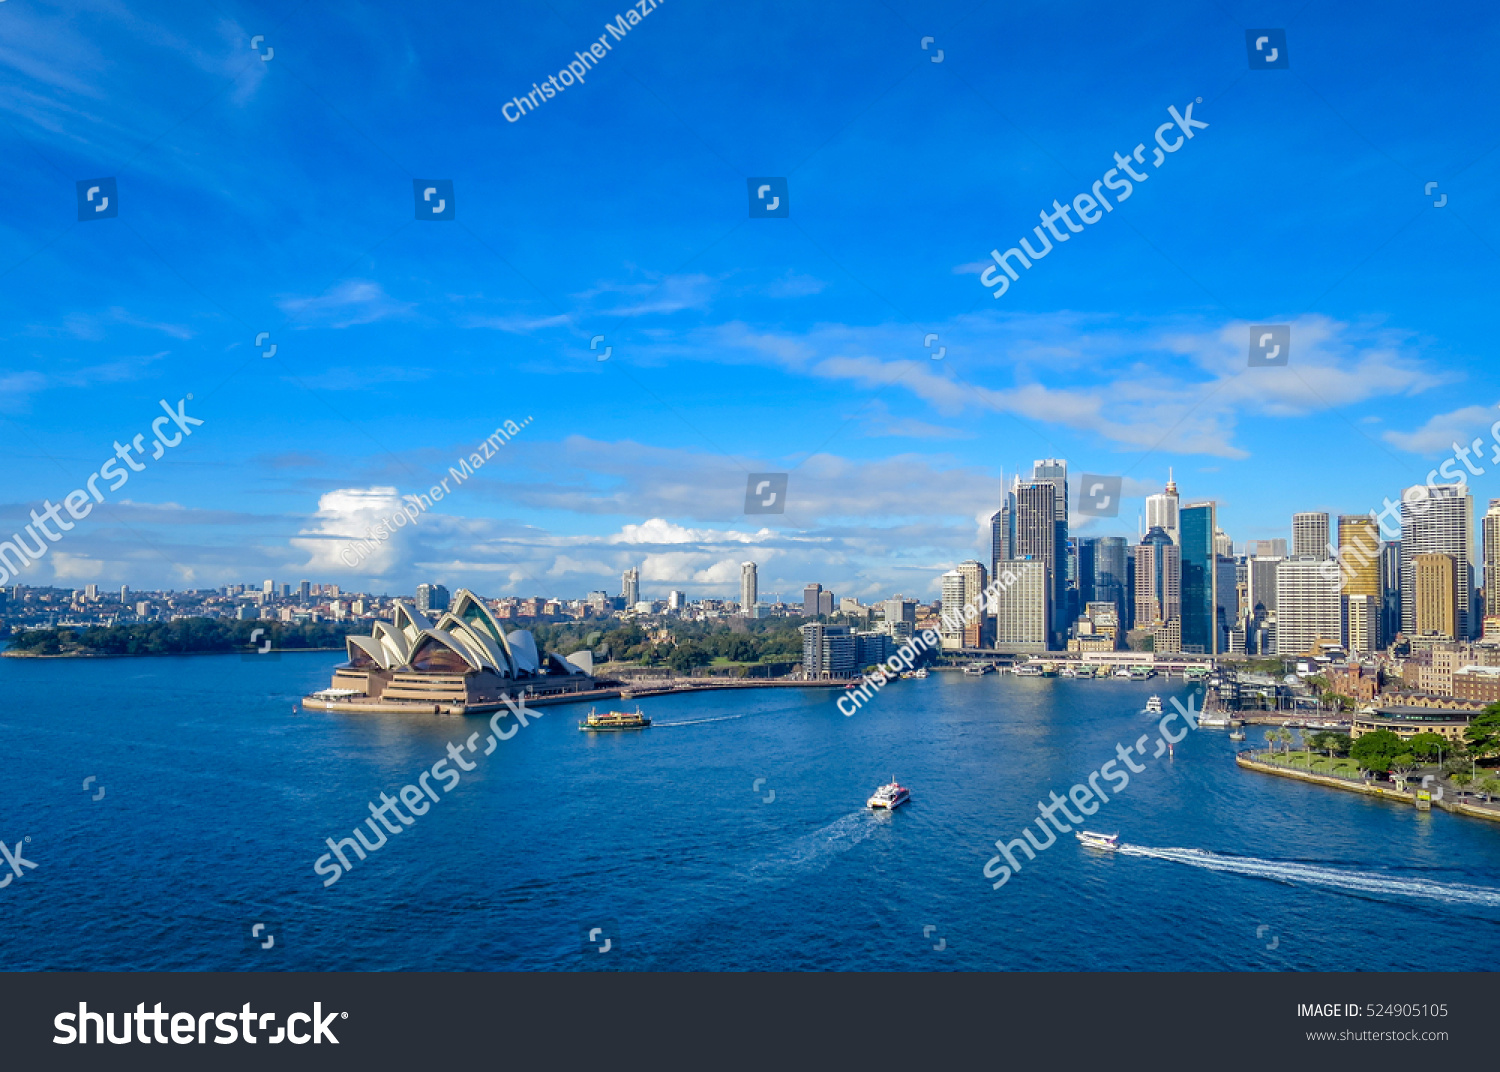 Sydney Harbor from the Bridge #524905105